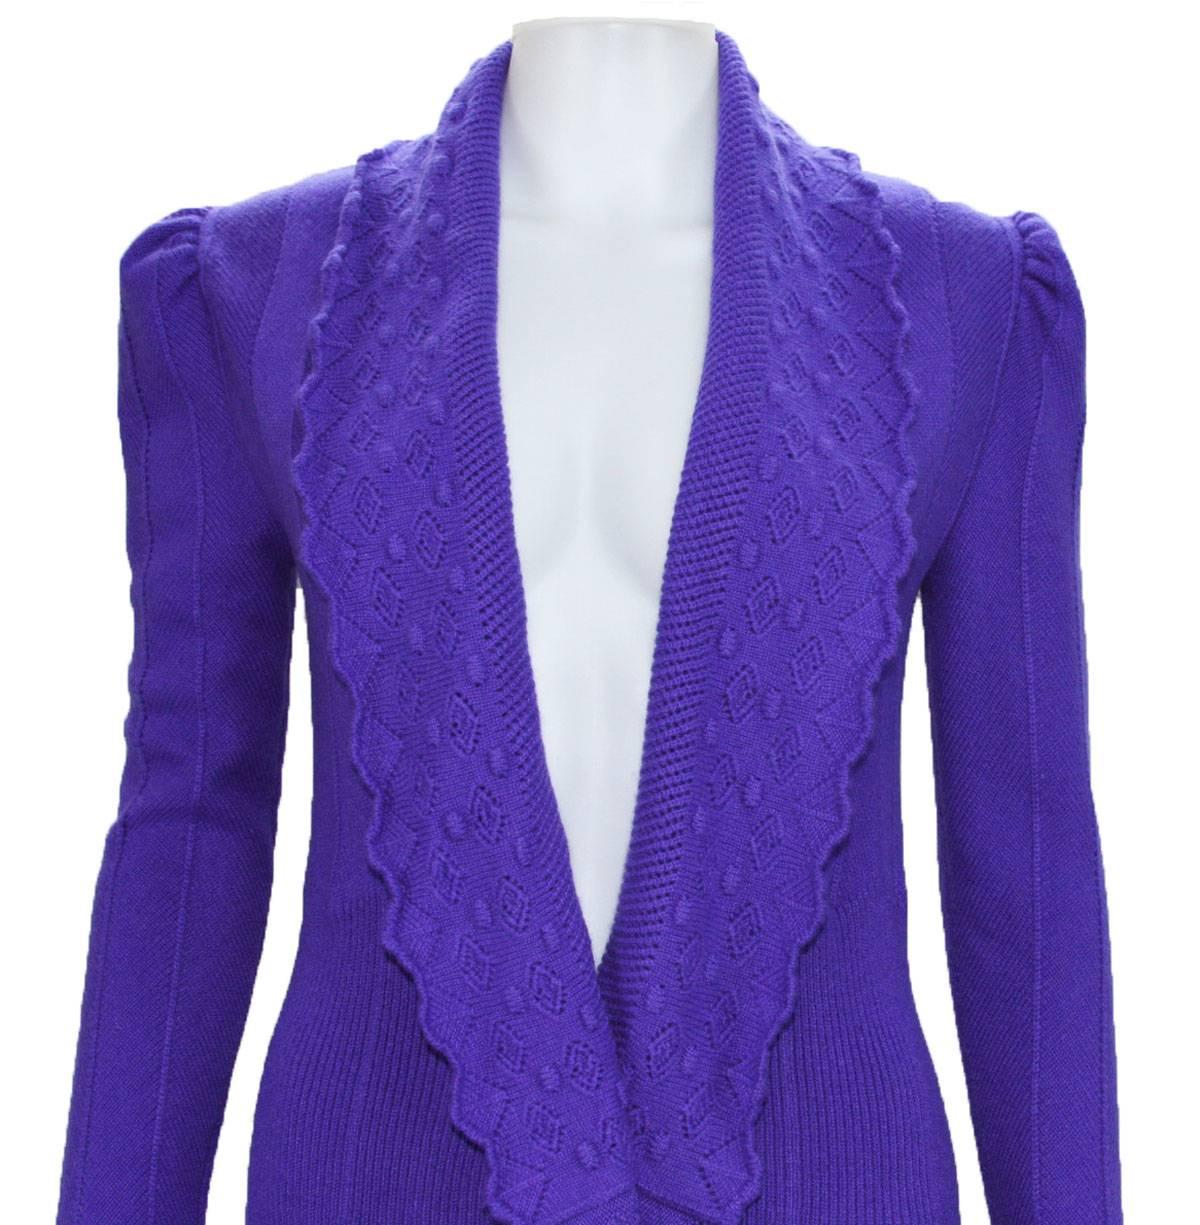 New $3090 Oscar de la Renta 100% Cashmere Ruffled Purple Long Cardigan Coat 1